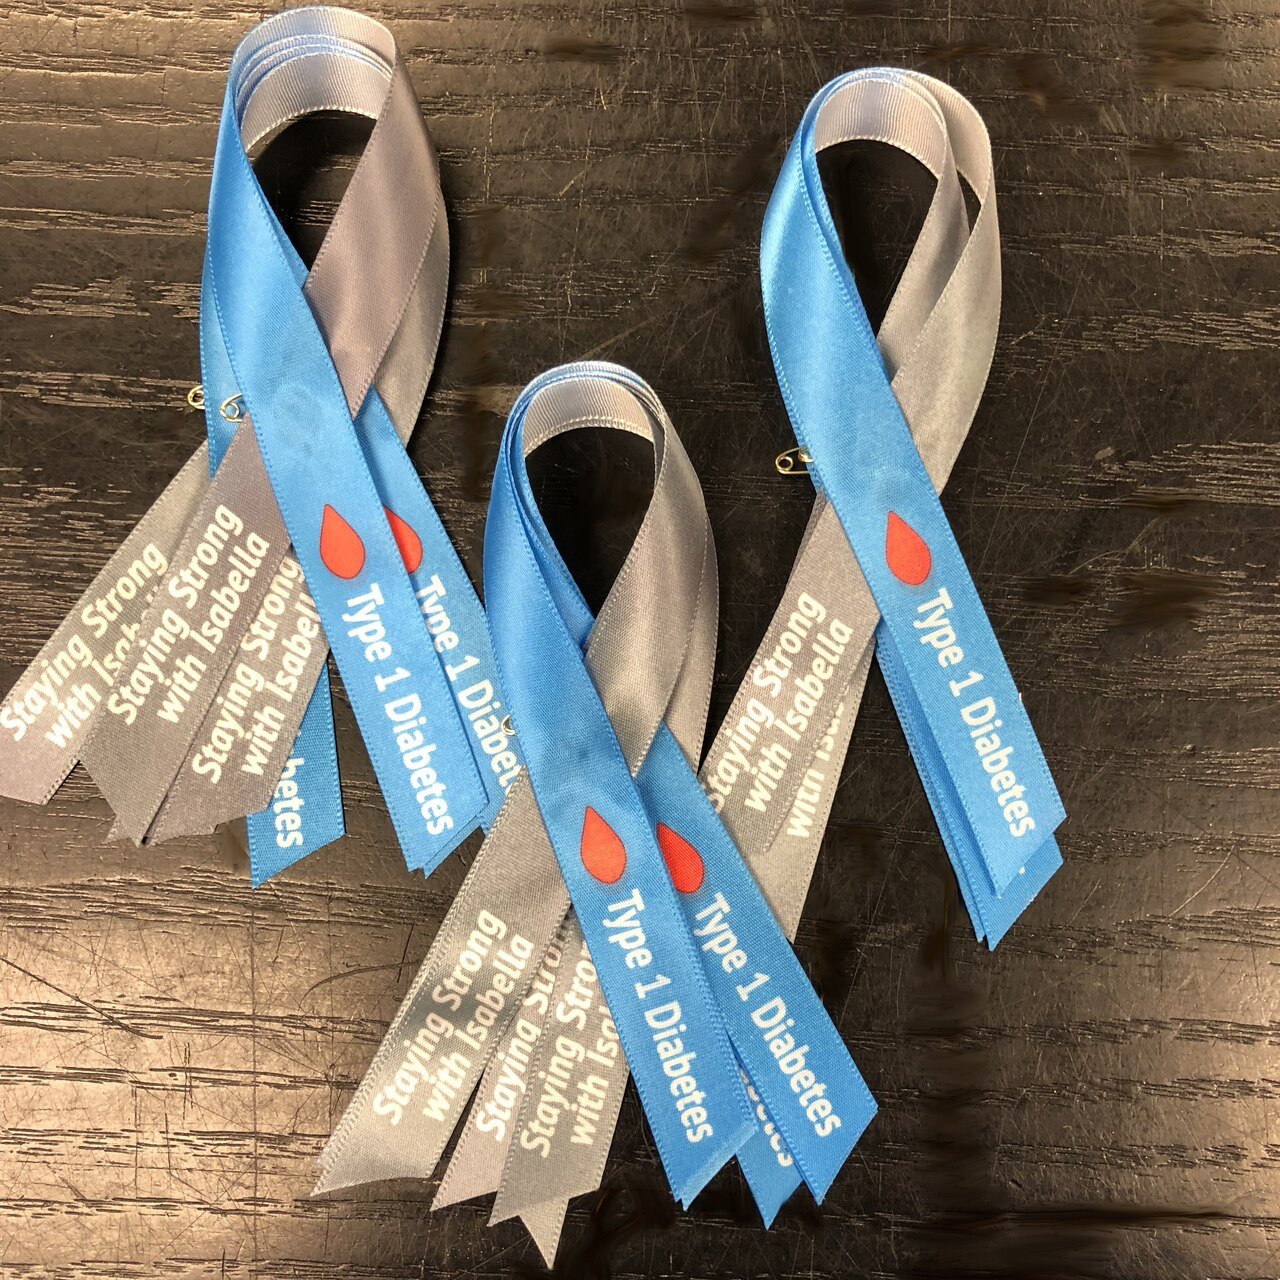 Diabetes Awareness Ribbon Personalized (Blue/Gray) Pack of 10 - Celebrate Prints